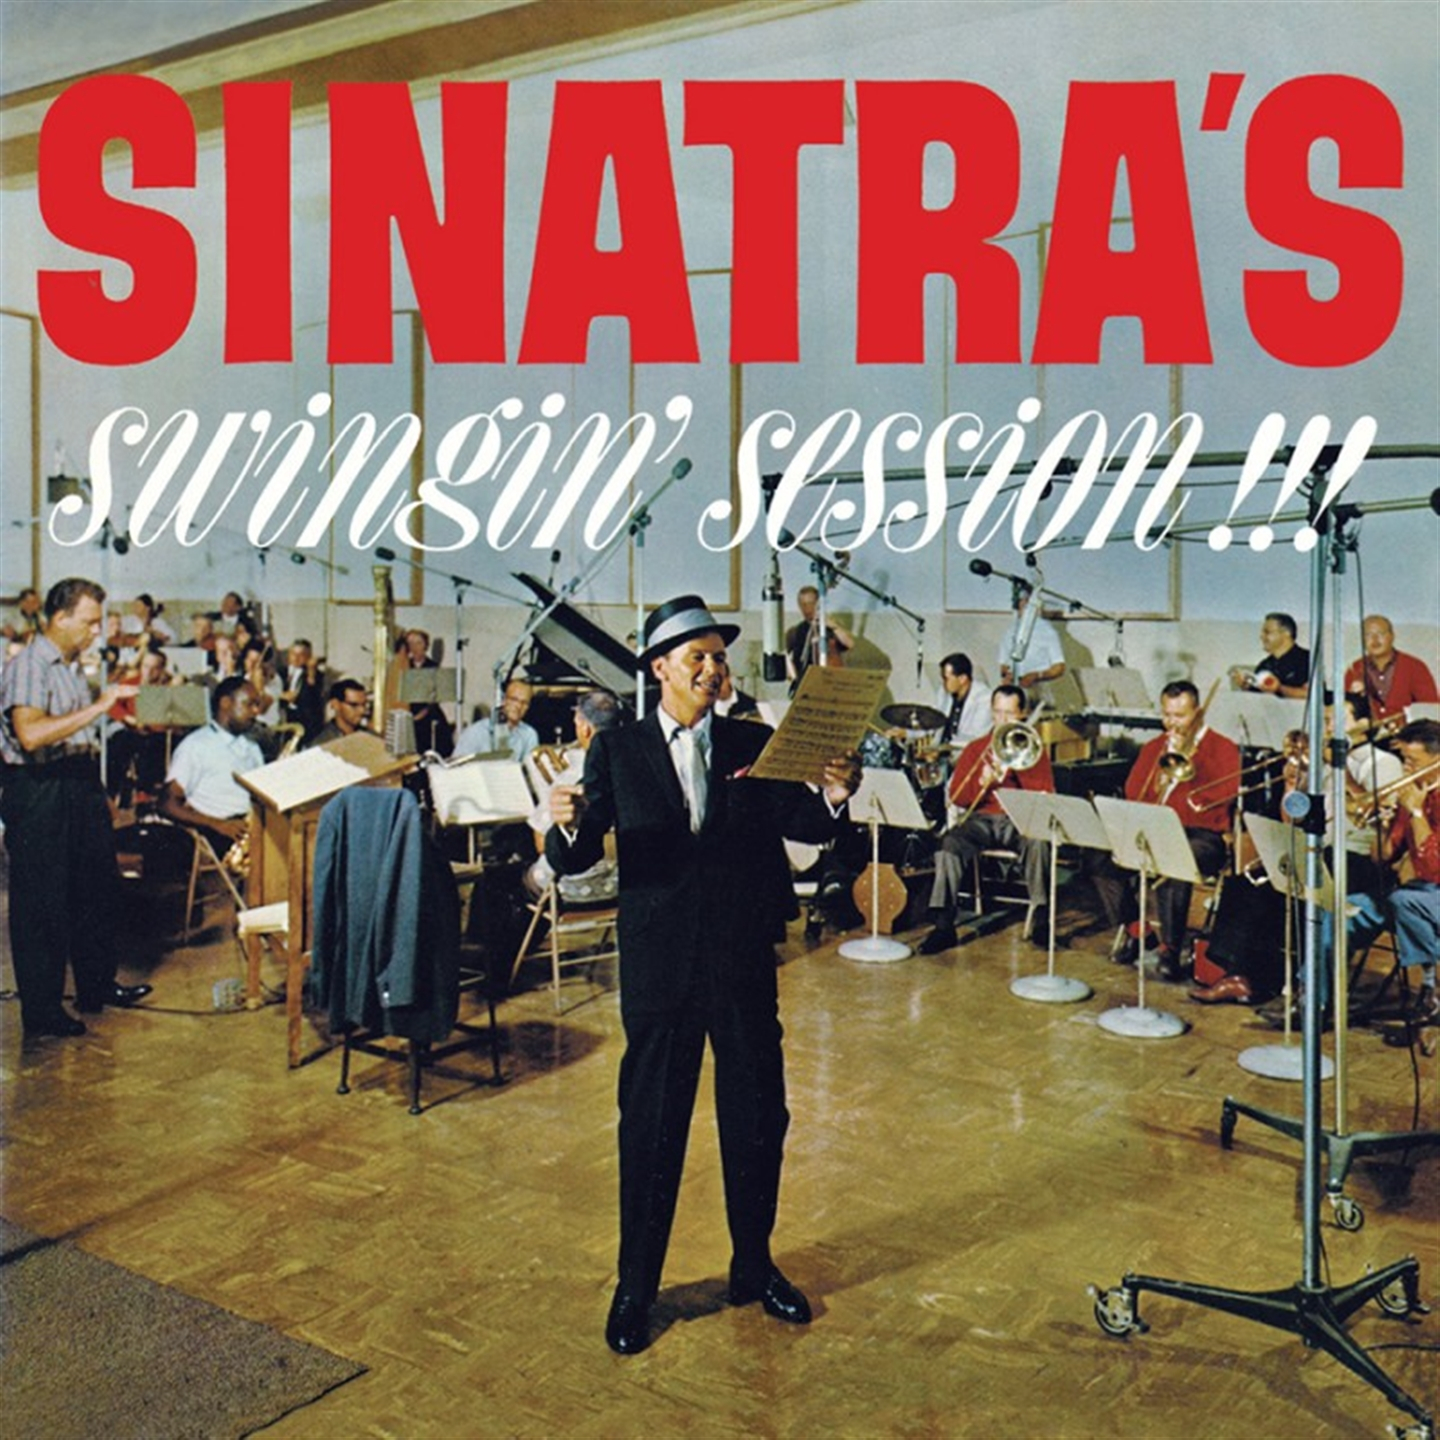 SINATRA'S SWINGIN' SESSION!!! + A SWINGIN' AFFAIR! + 2 BONUS TRACKS (2 ALBUMS O